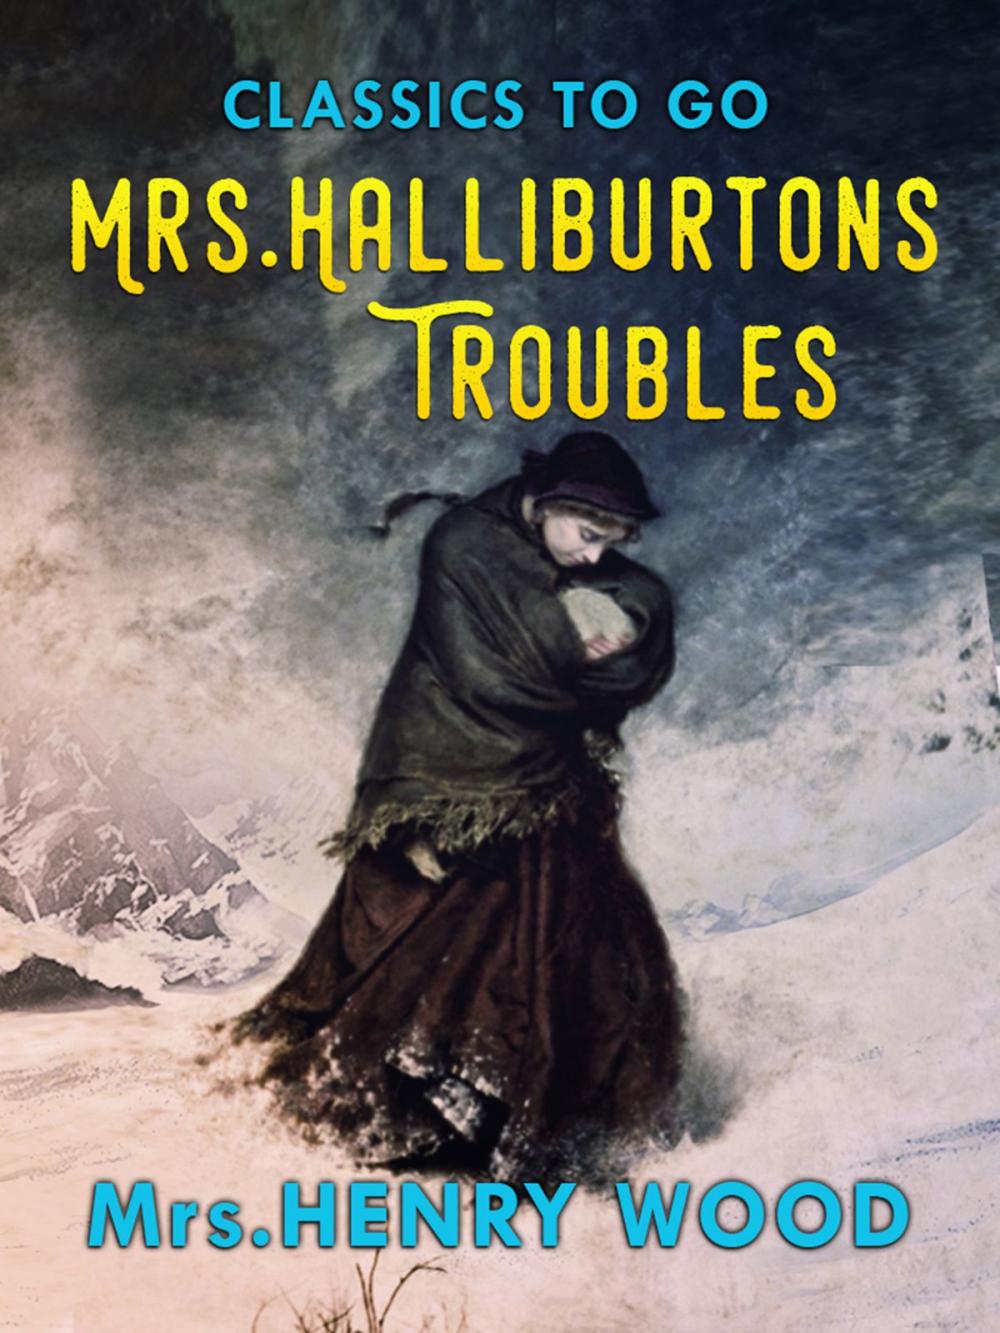 Big bigCover of Mrs. Halliburton's Troubles